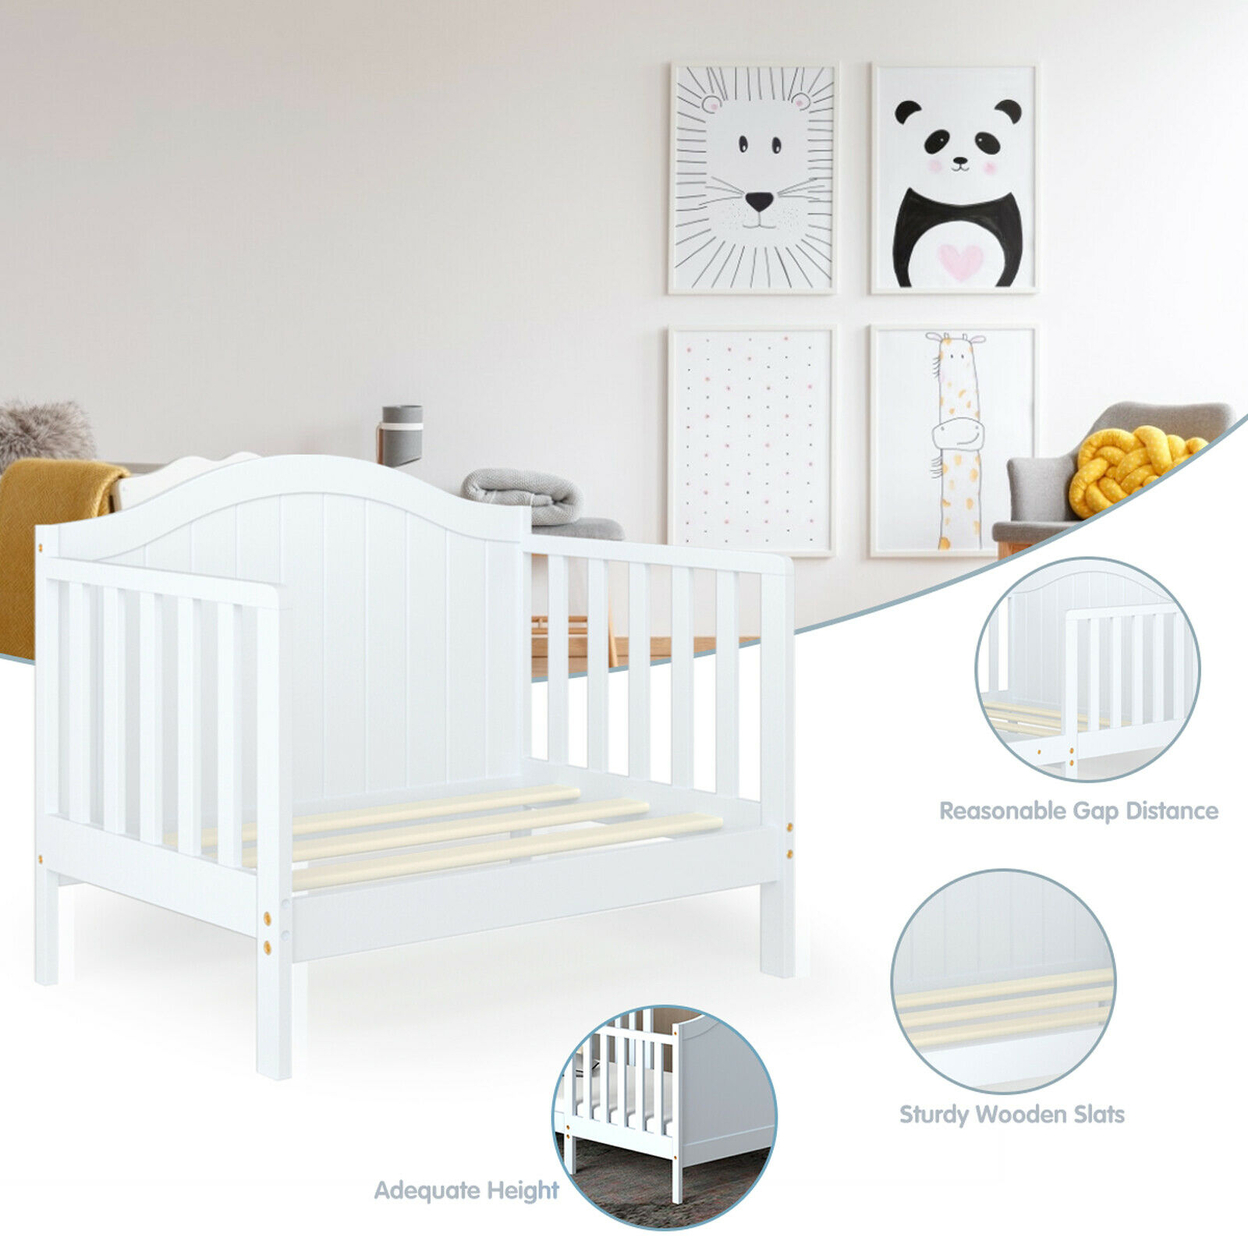 2-in-1 Convertible Toddler Bed Kids Wooden Bedroom Furniture W/ Guardrails - Brown